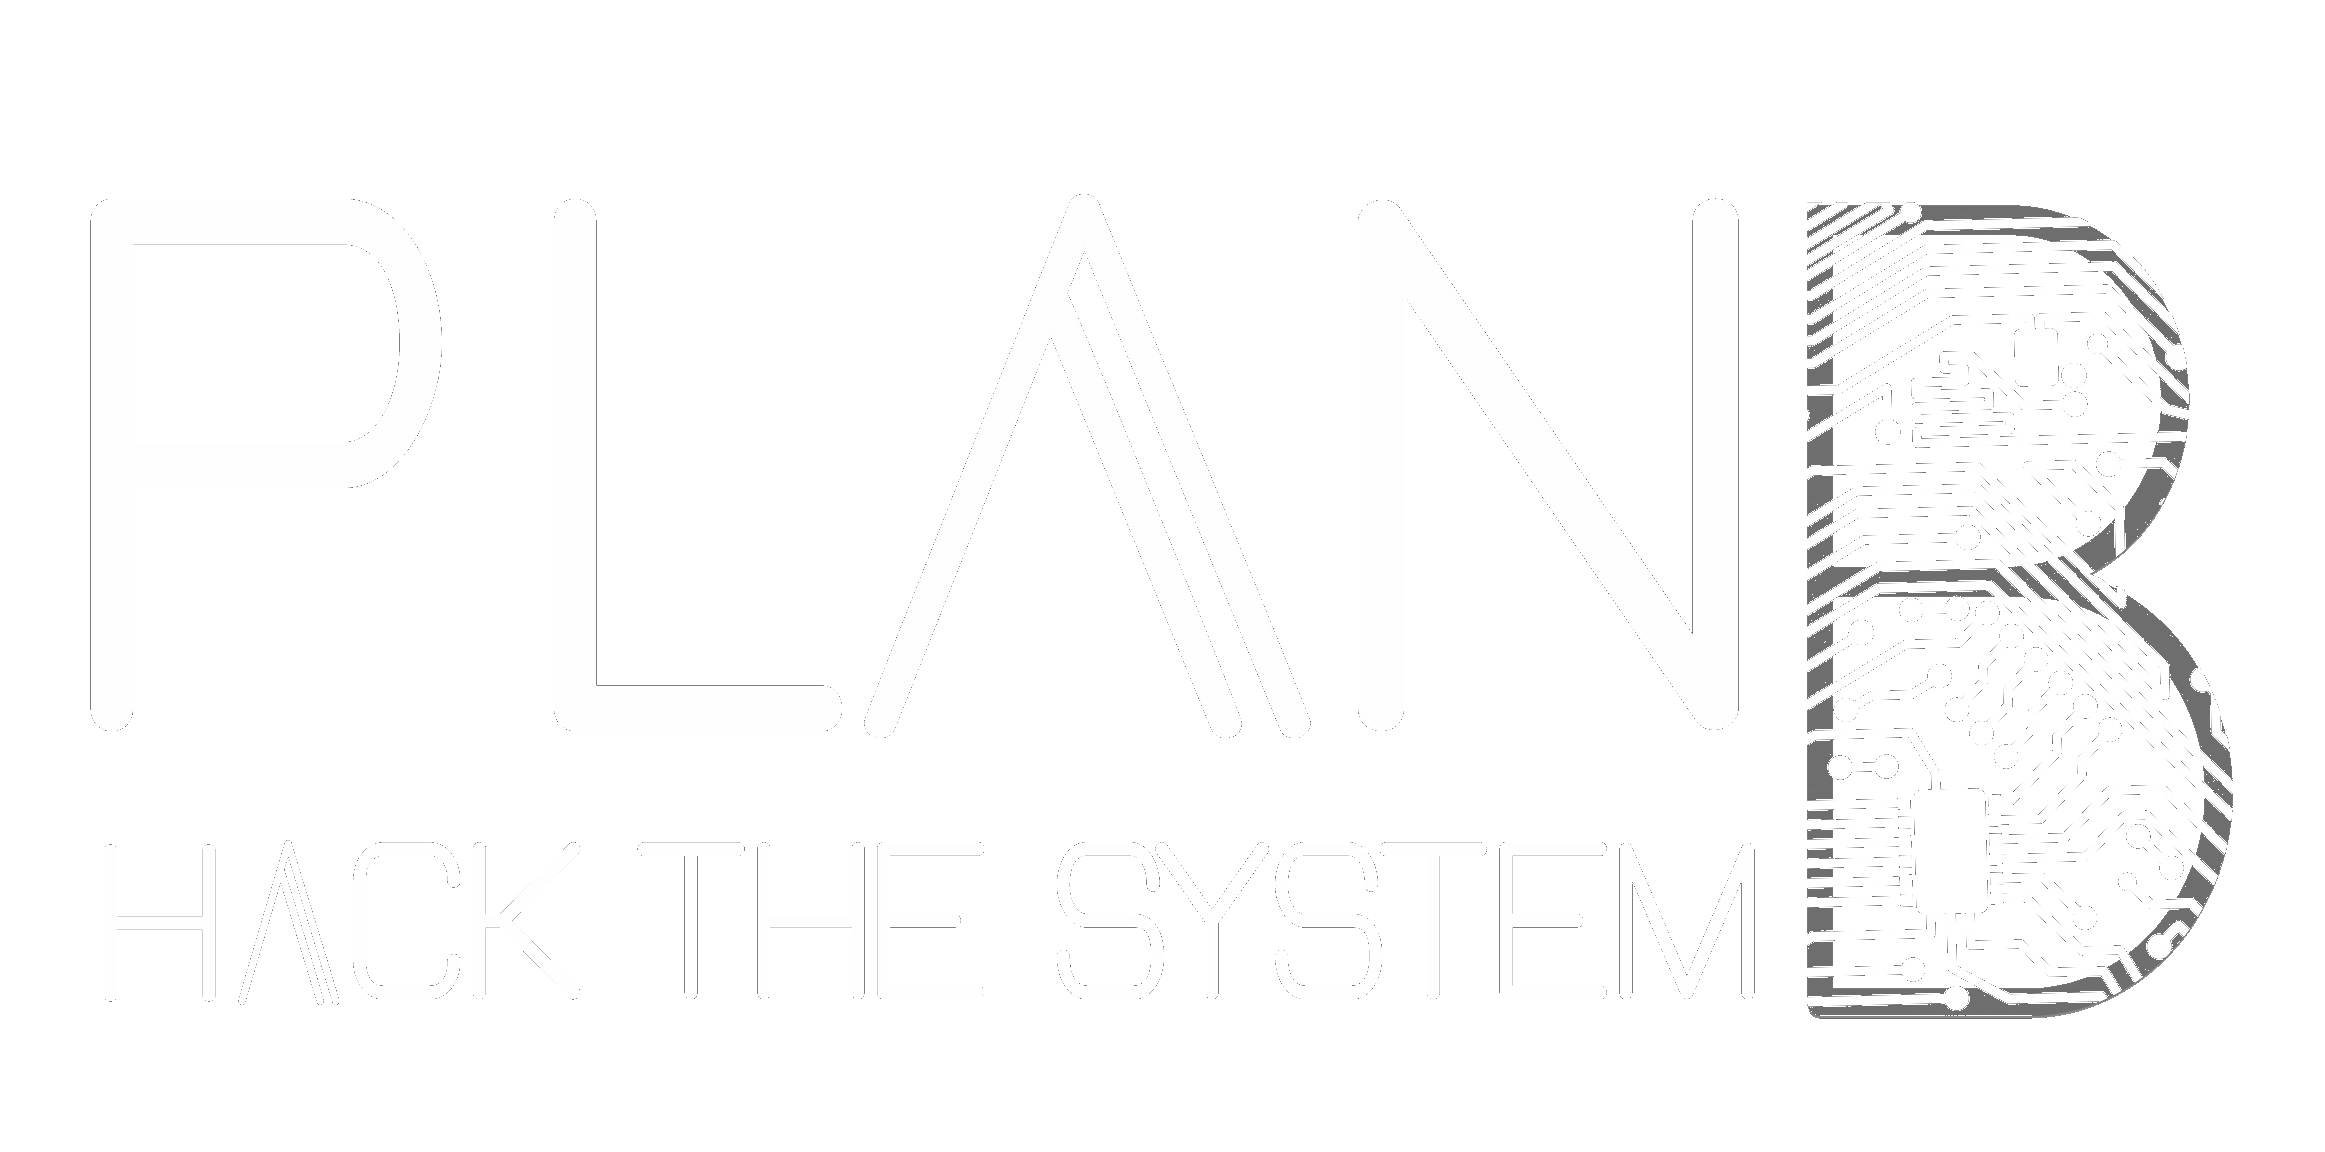 Plan B: Hack the System